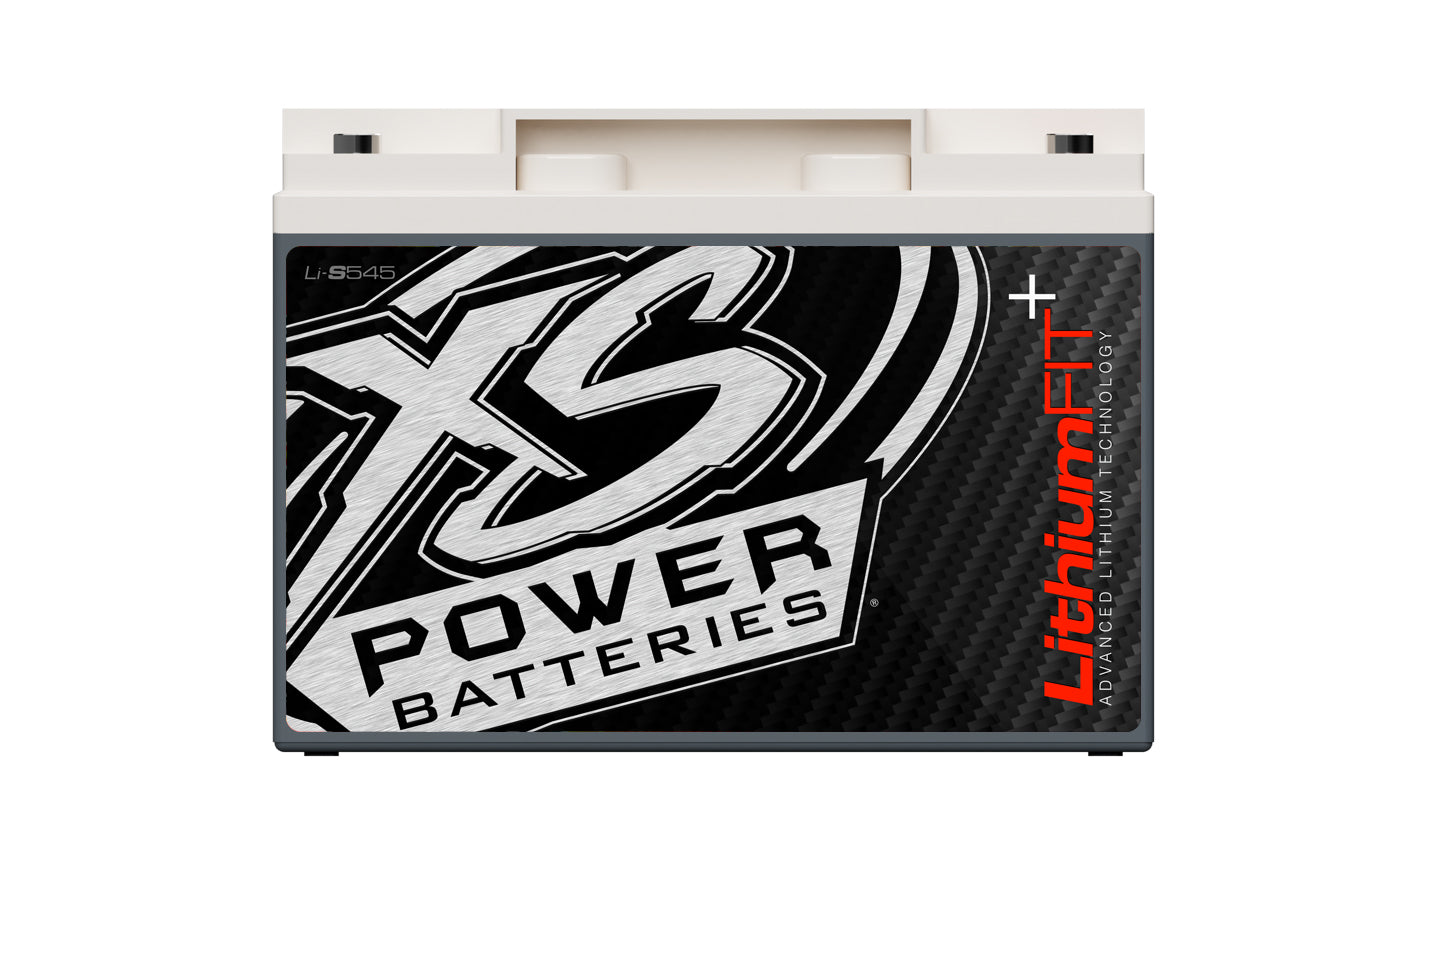 Li-S545 XS Power 12VDC Lithium Racing Vehicle Battery 960A 10.4Ah